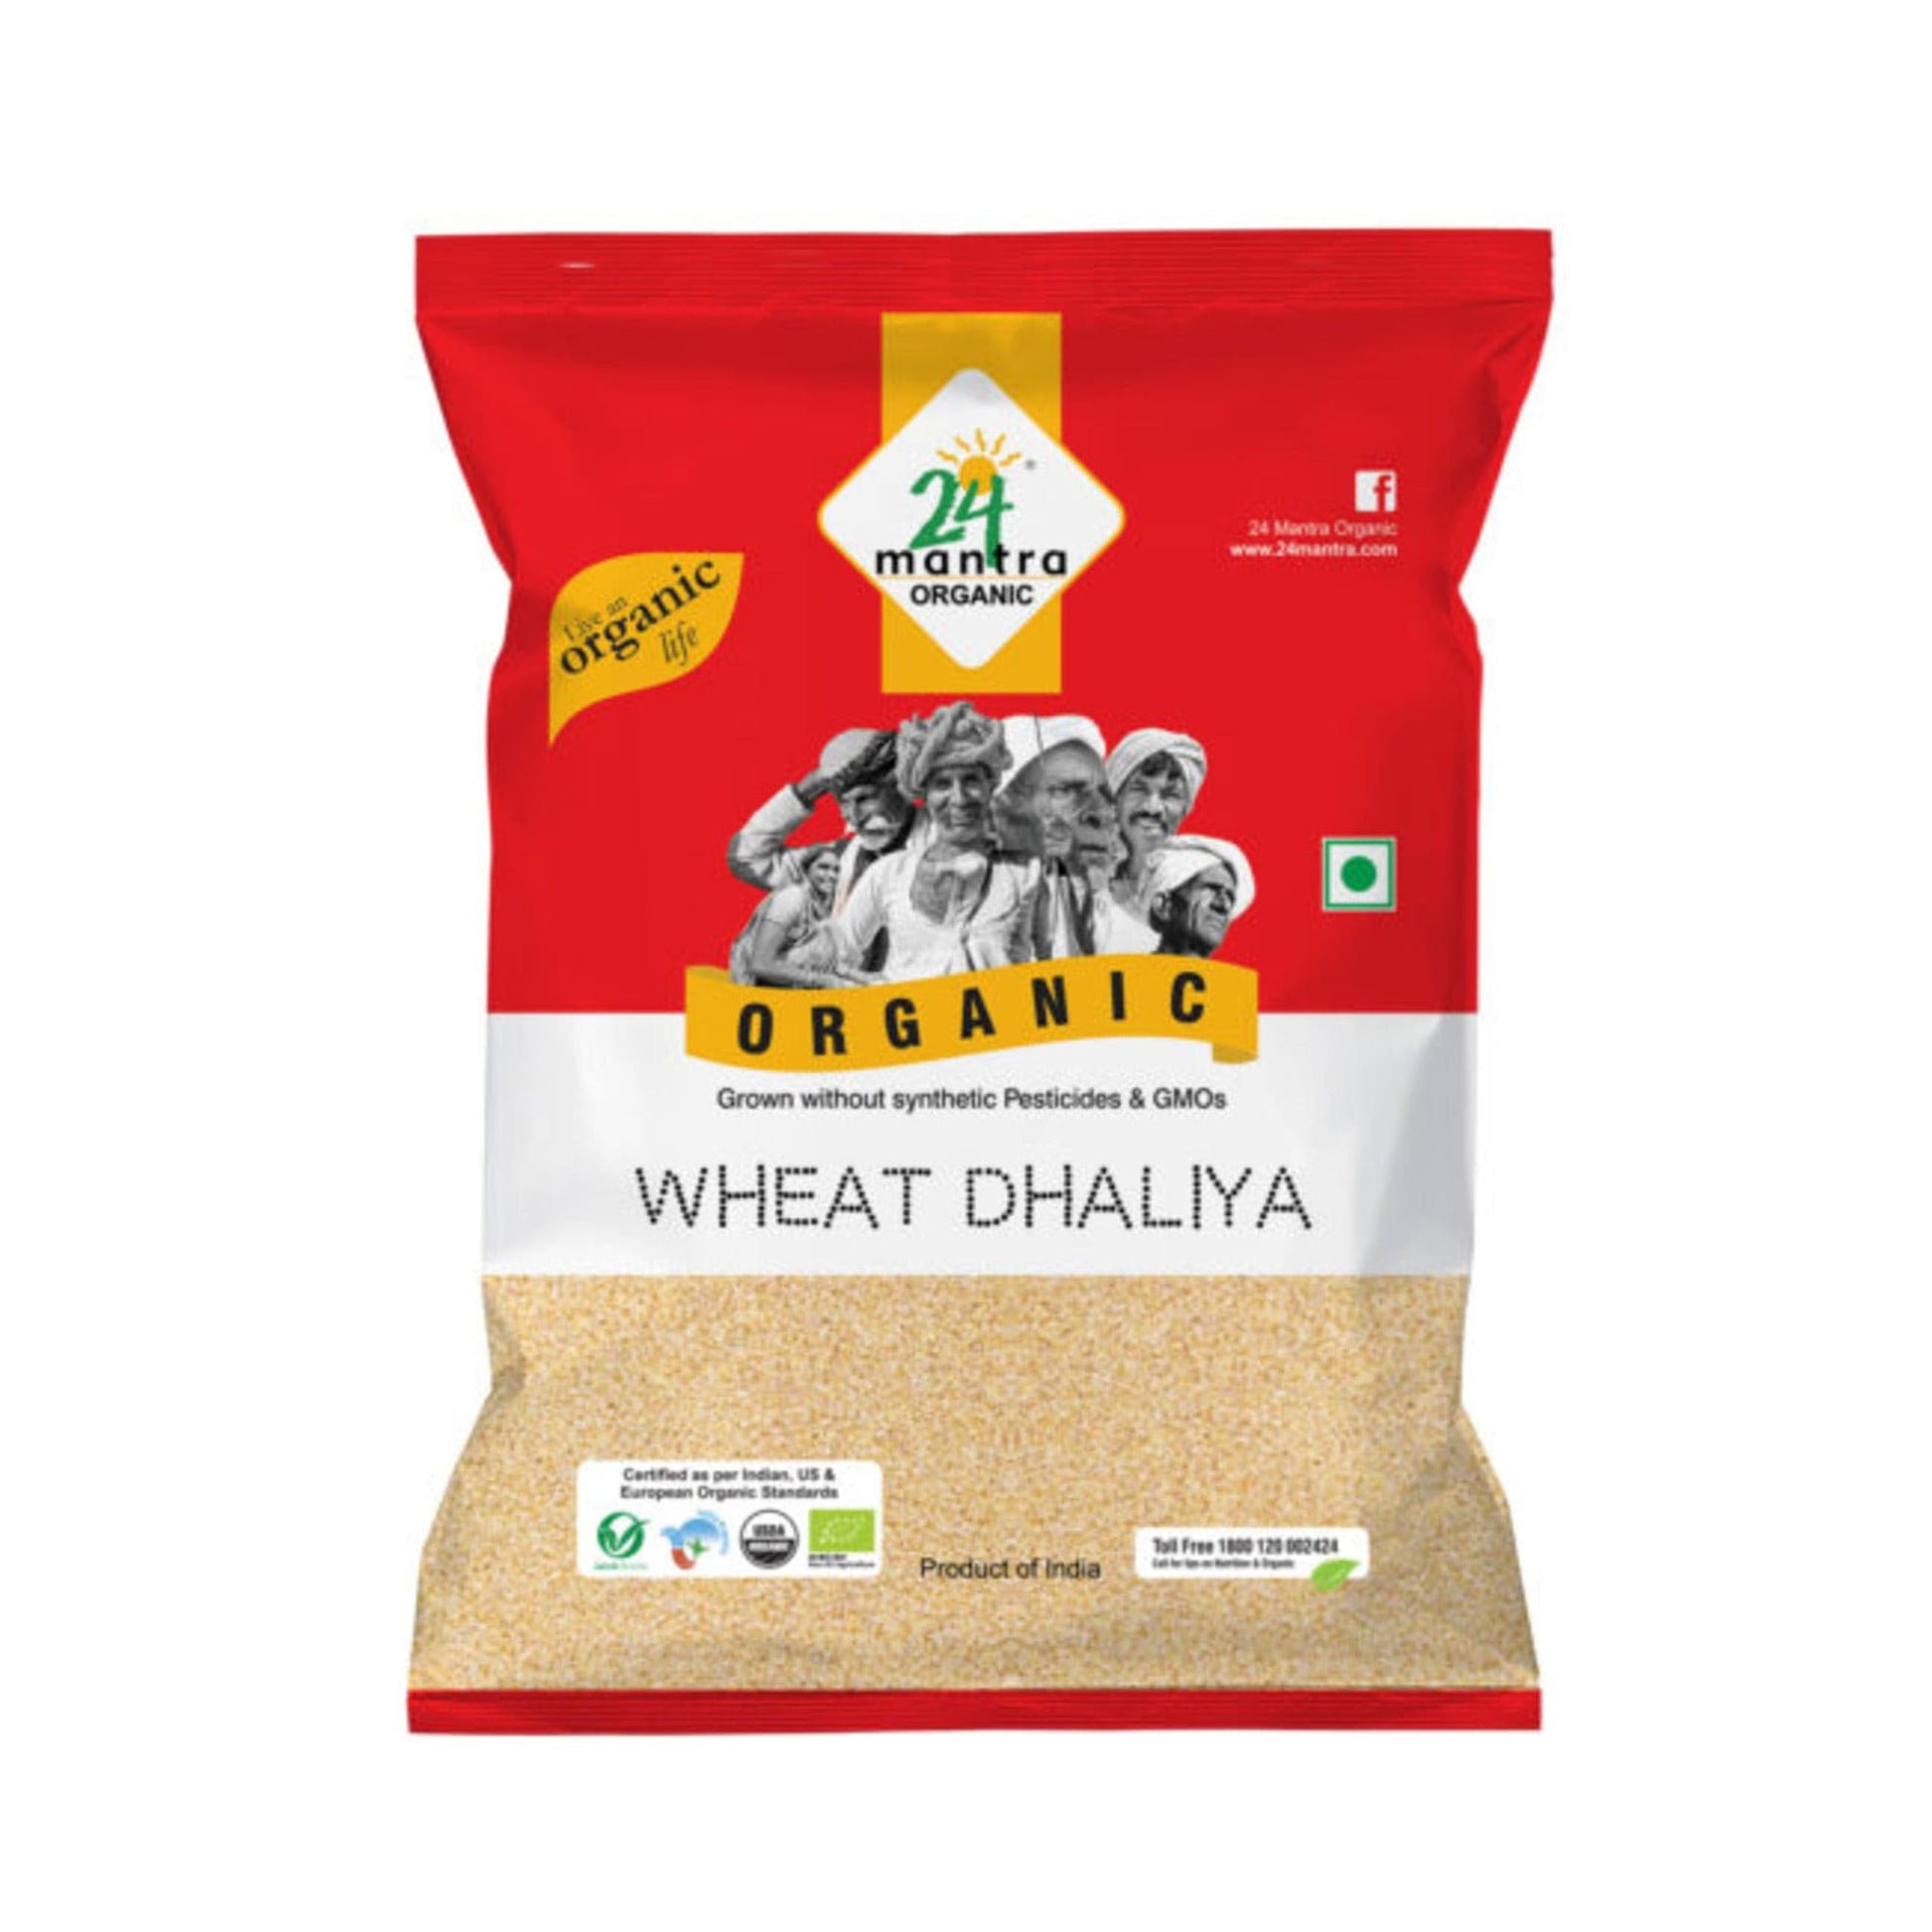 24 Mantra Organic Wheat Dhaliya.